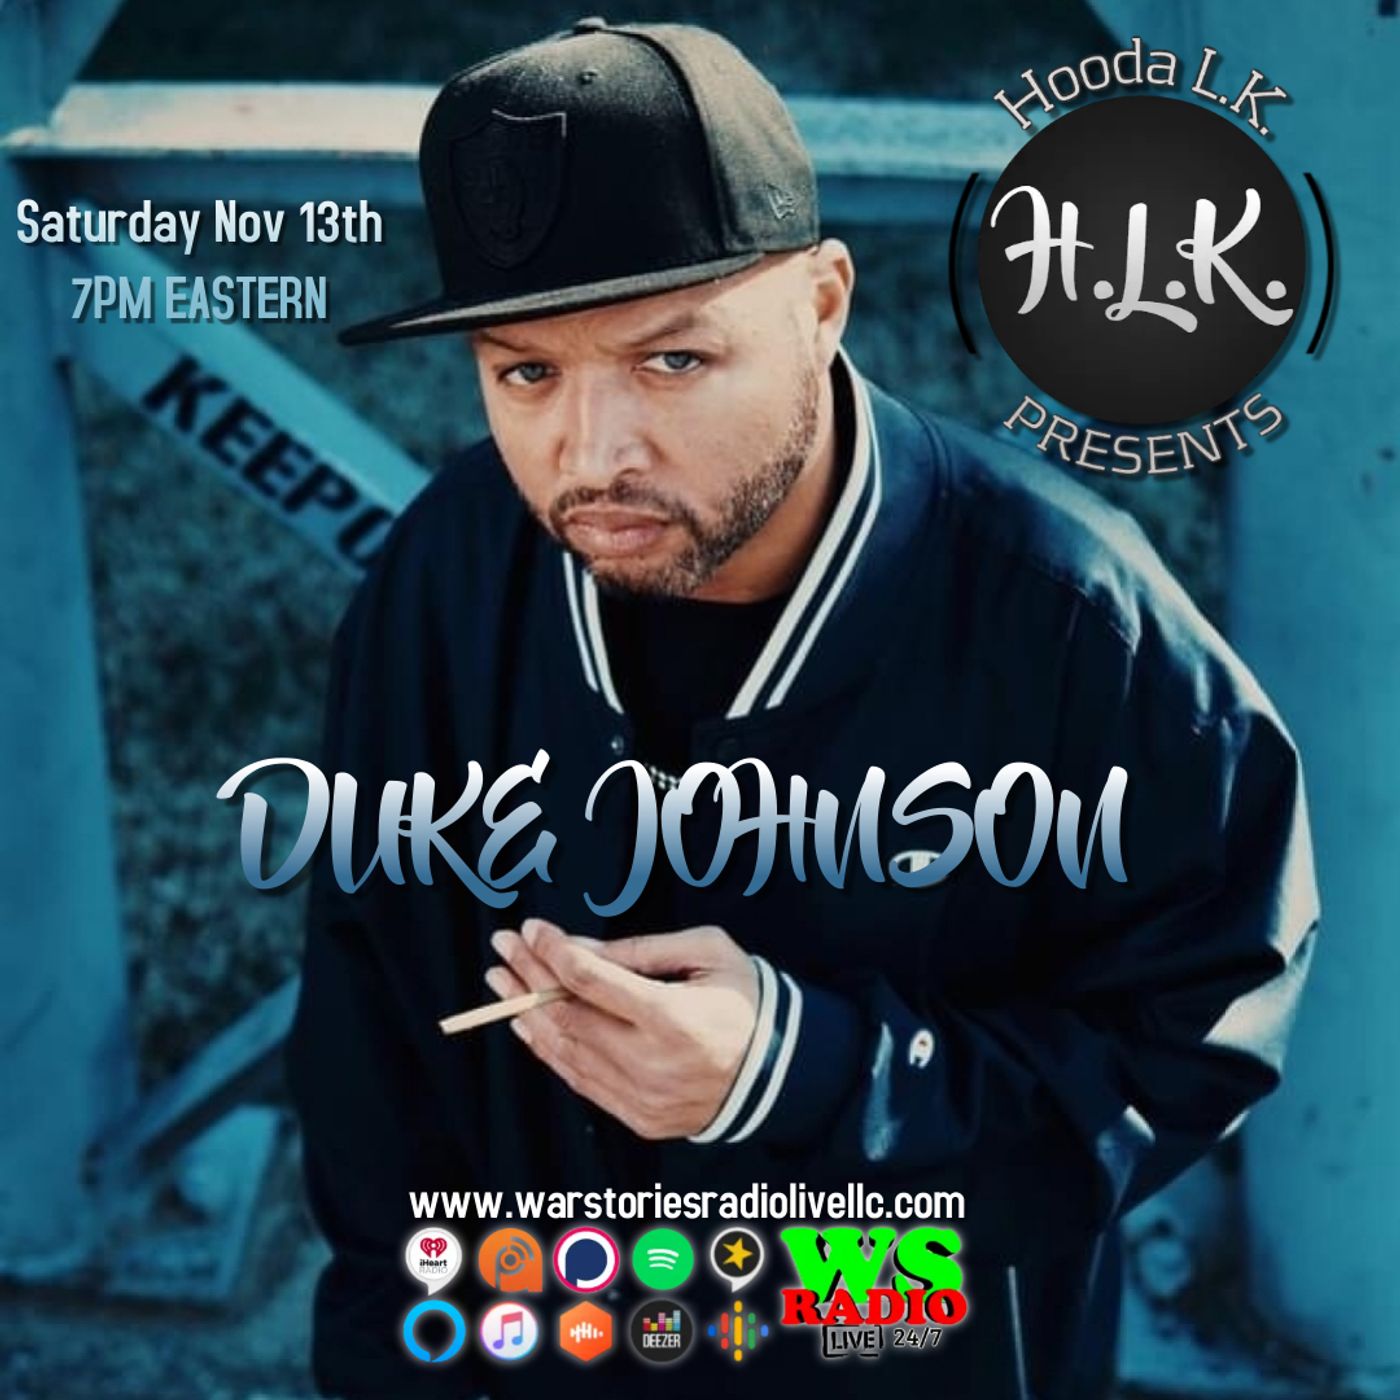 Hooda LK Presents | Duke Johnson